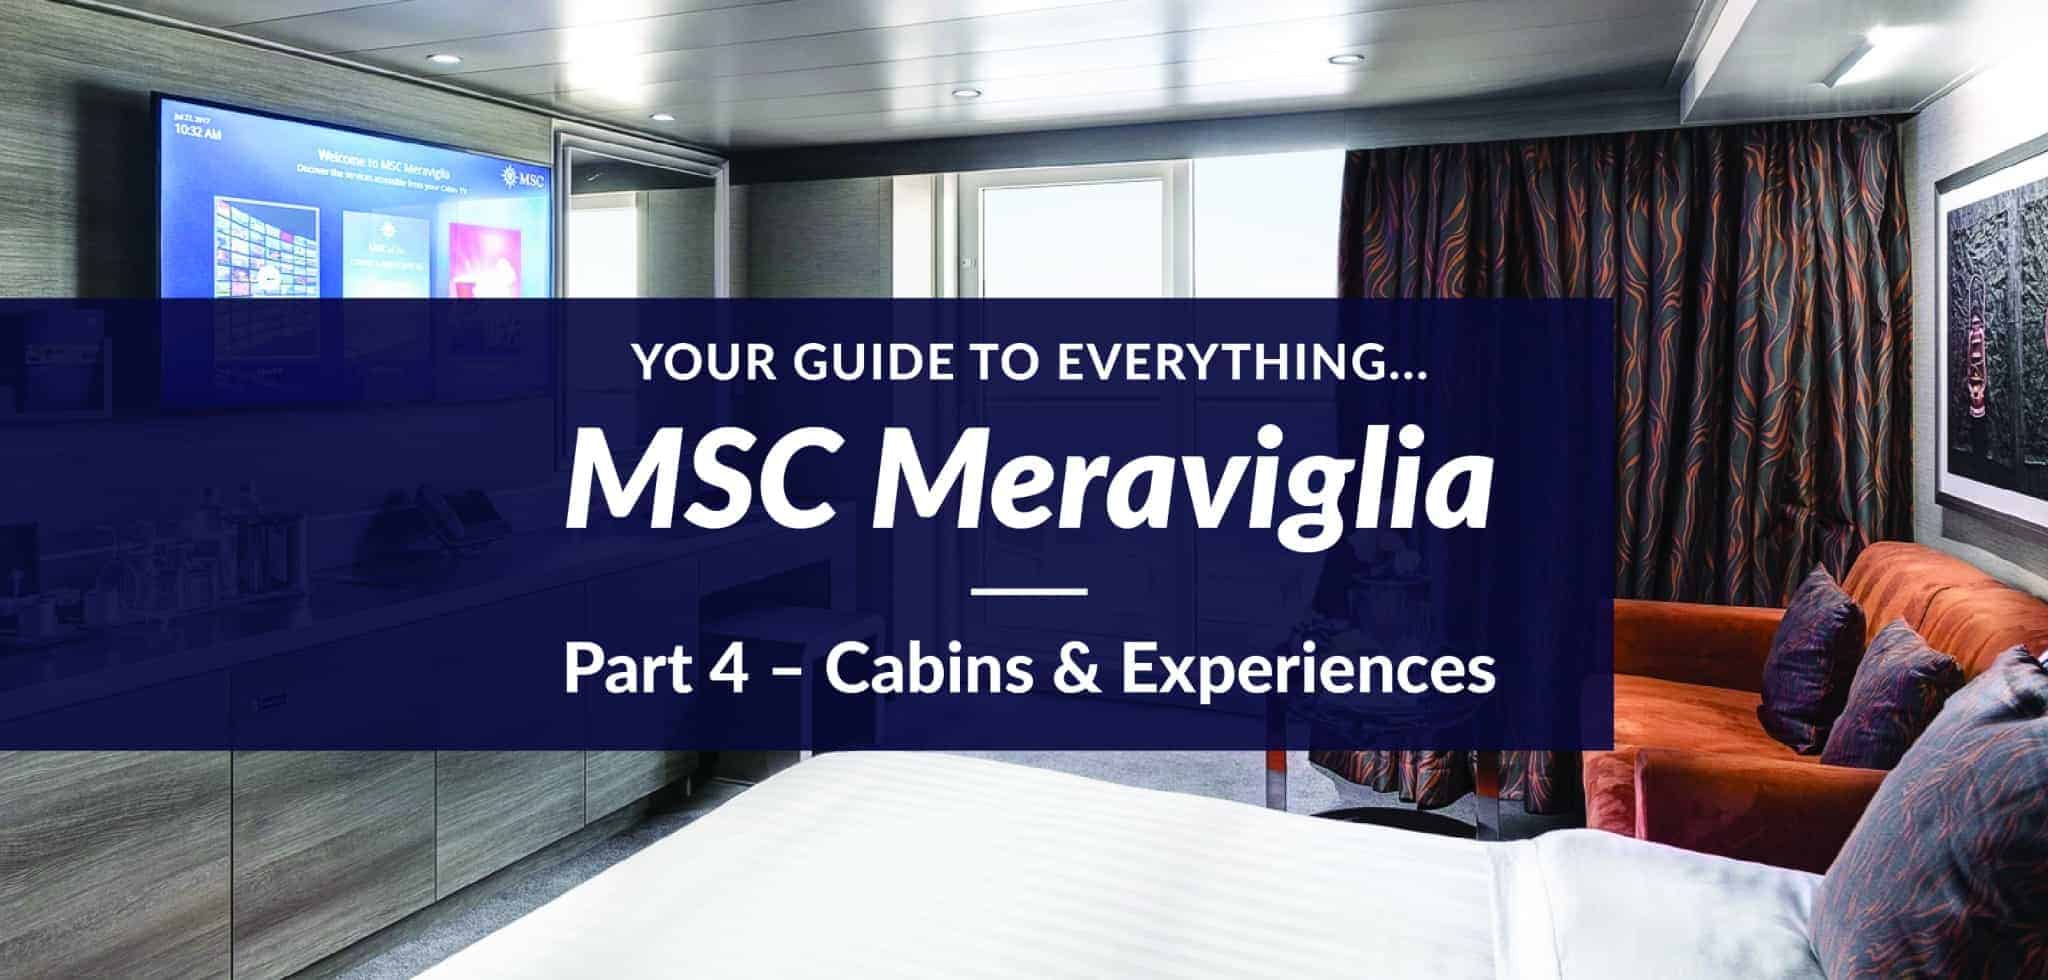 MSC Meraviglia Cabins and Experiences Guide